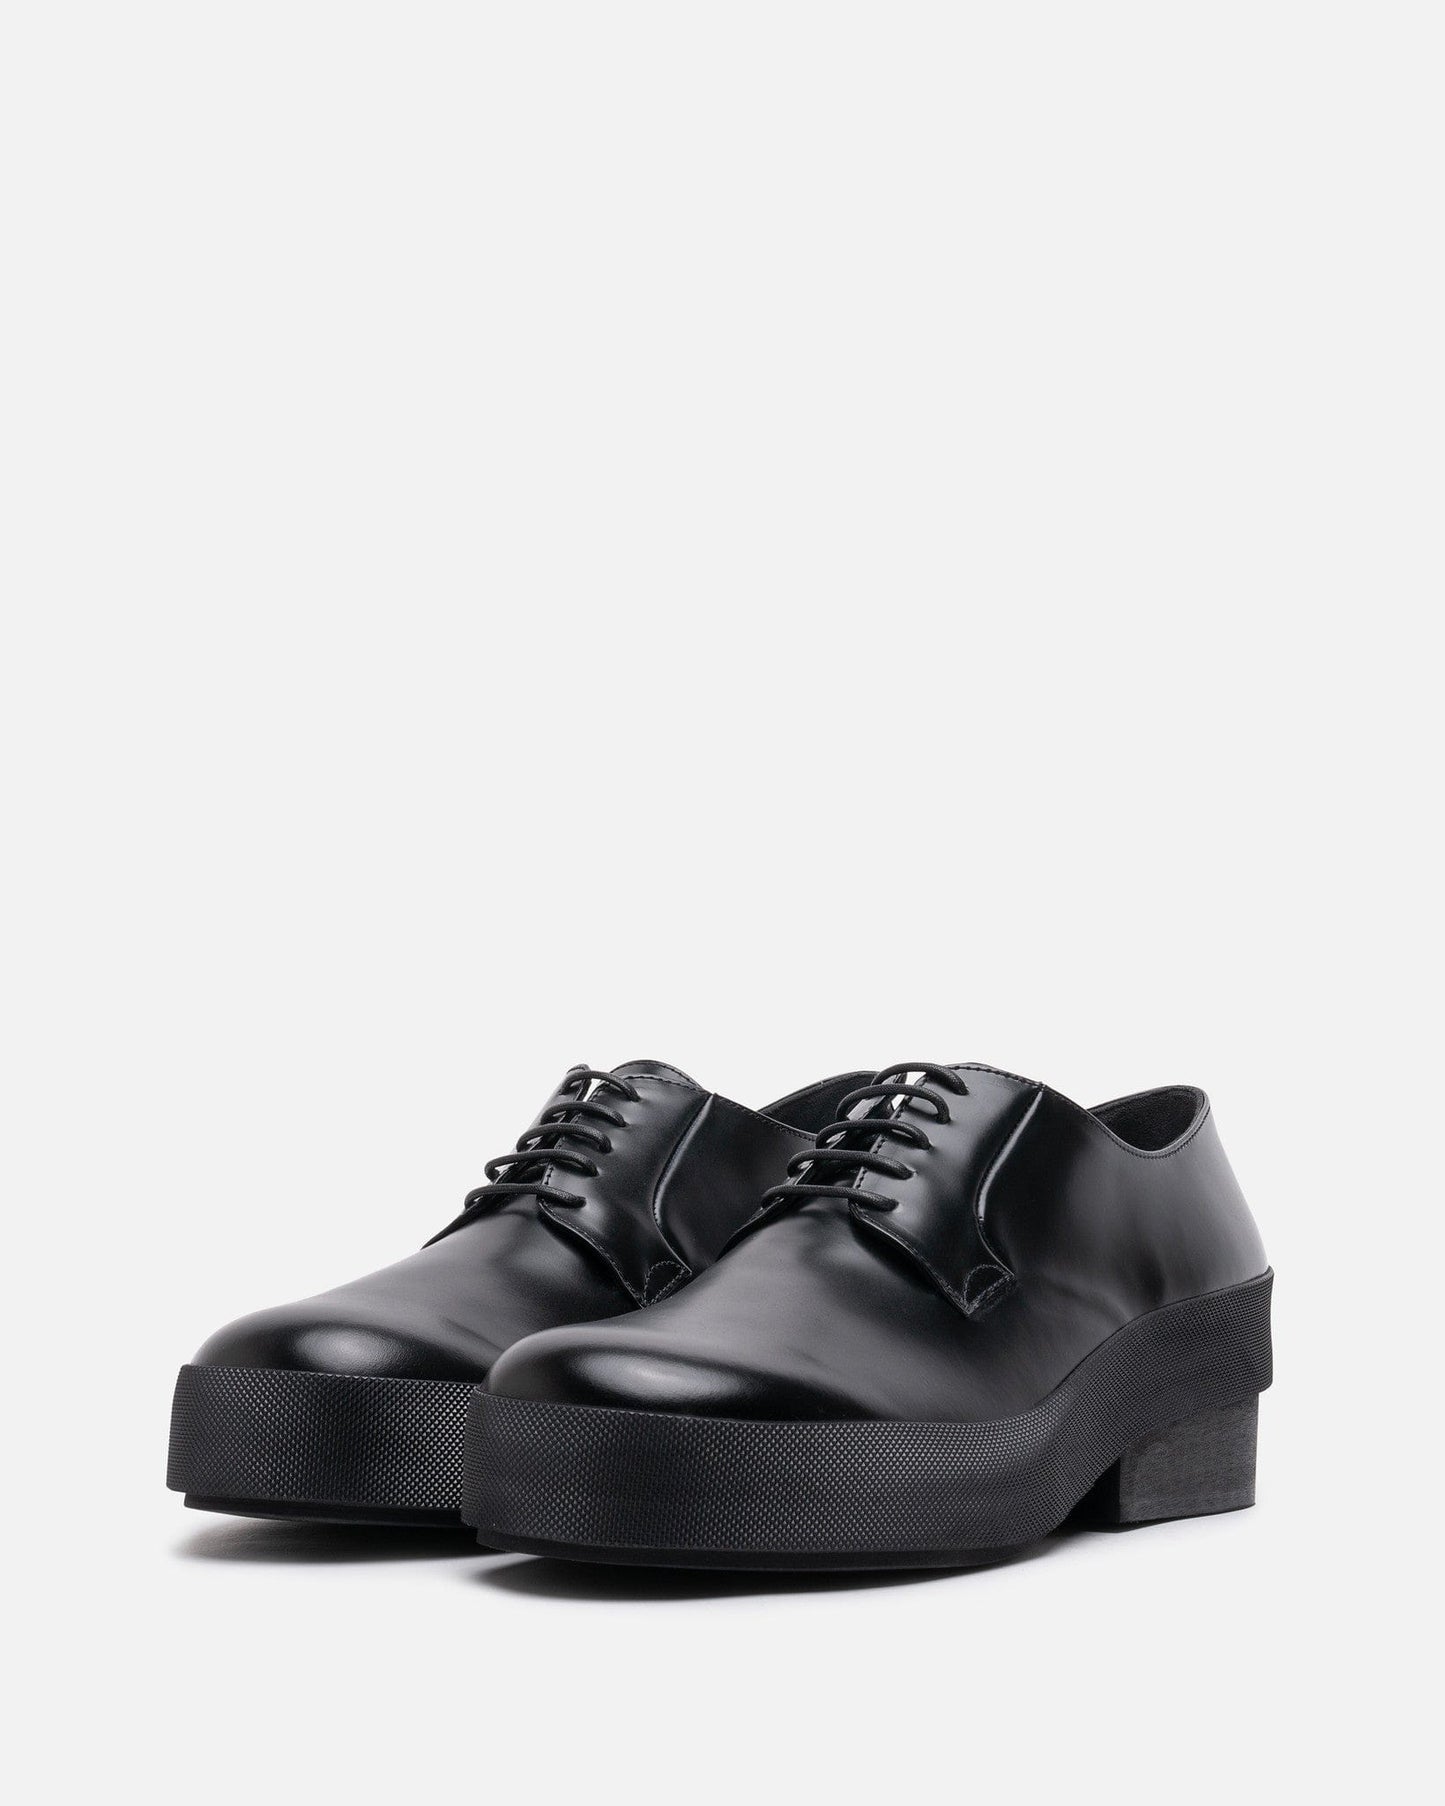 Raf Simons Men's Shoes Block Heel Derby Shoe in Black